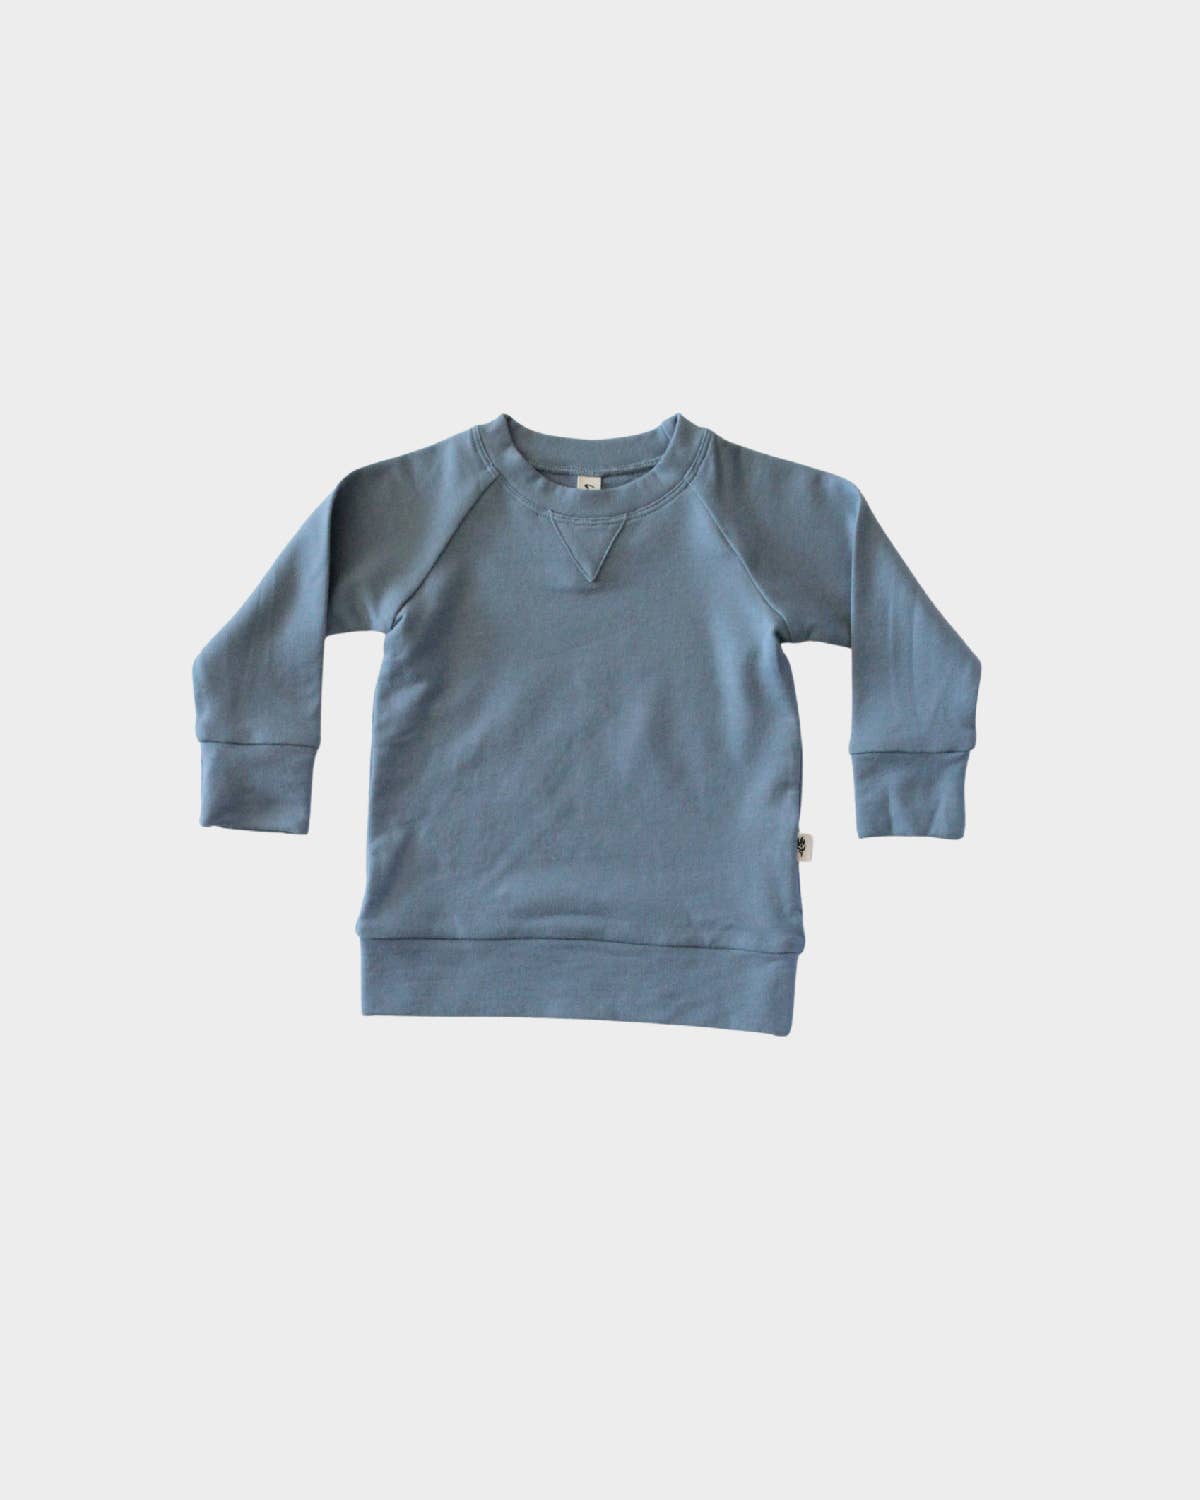 Raglan Sweatshirt: Slate Blue